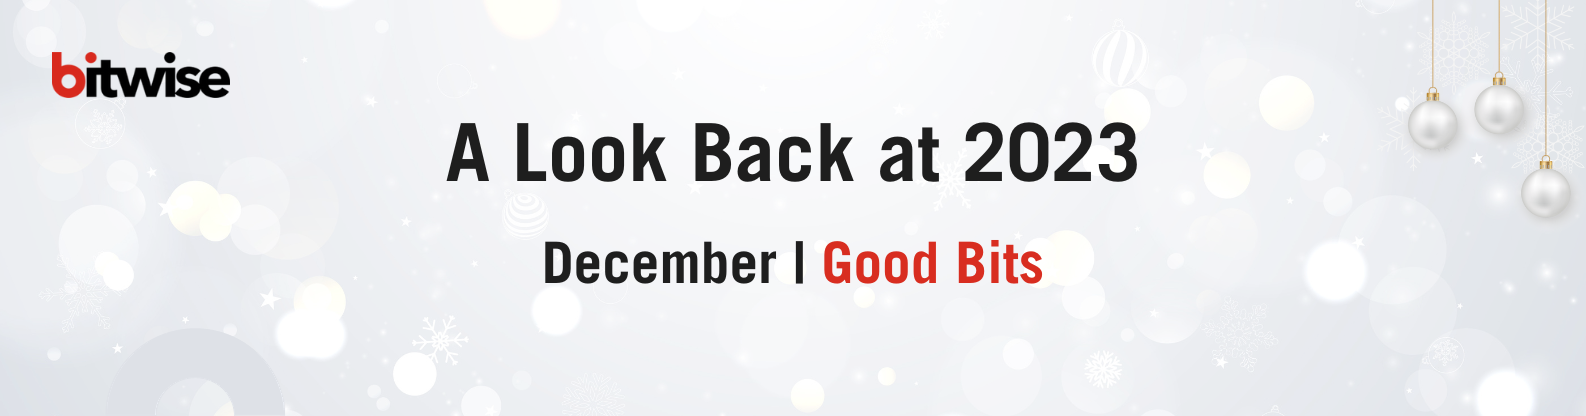 December Good Bits Newsletter Graphics -1 793x208